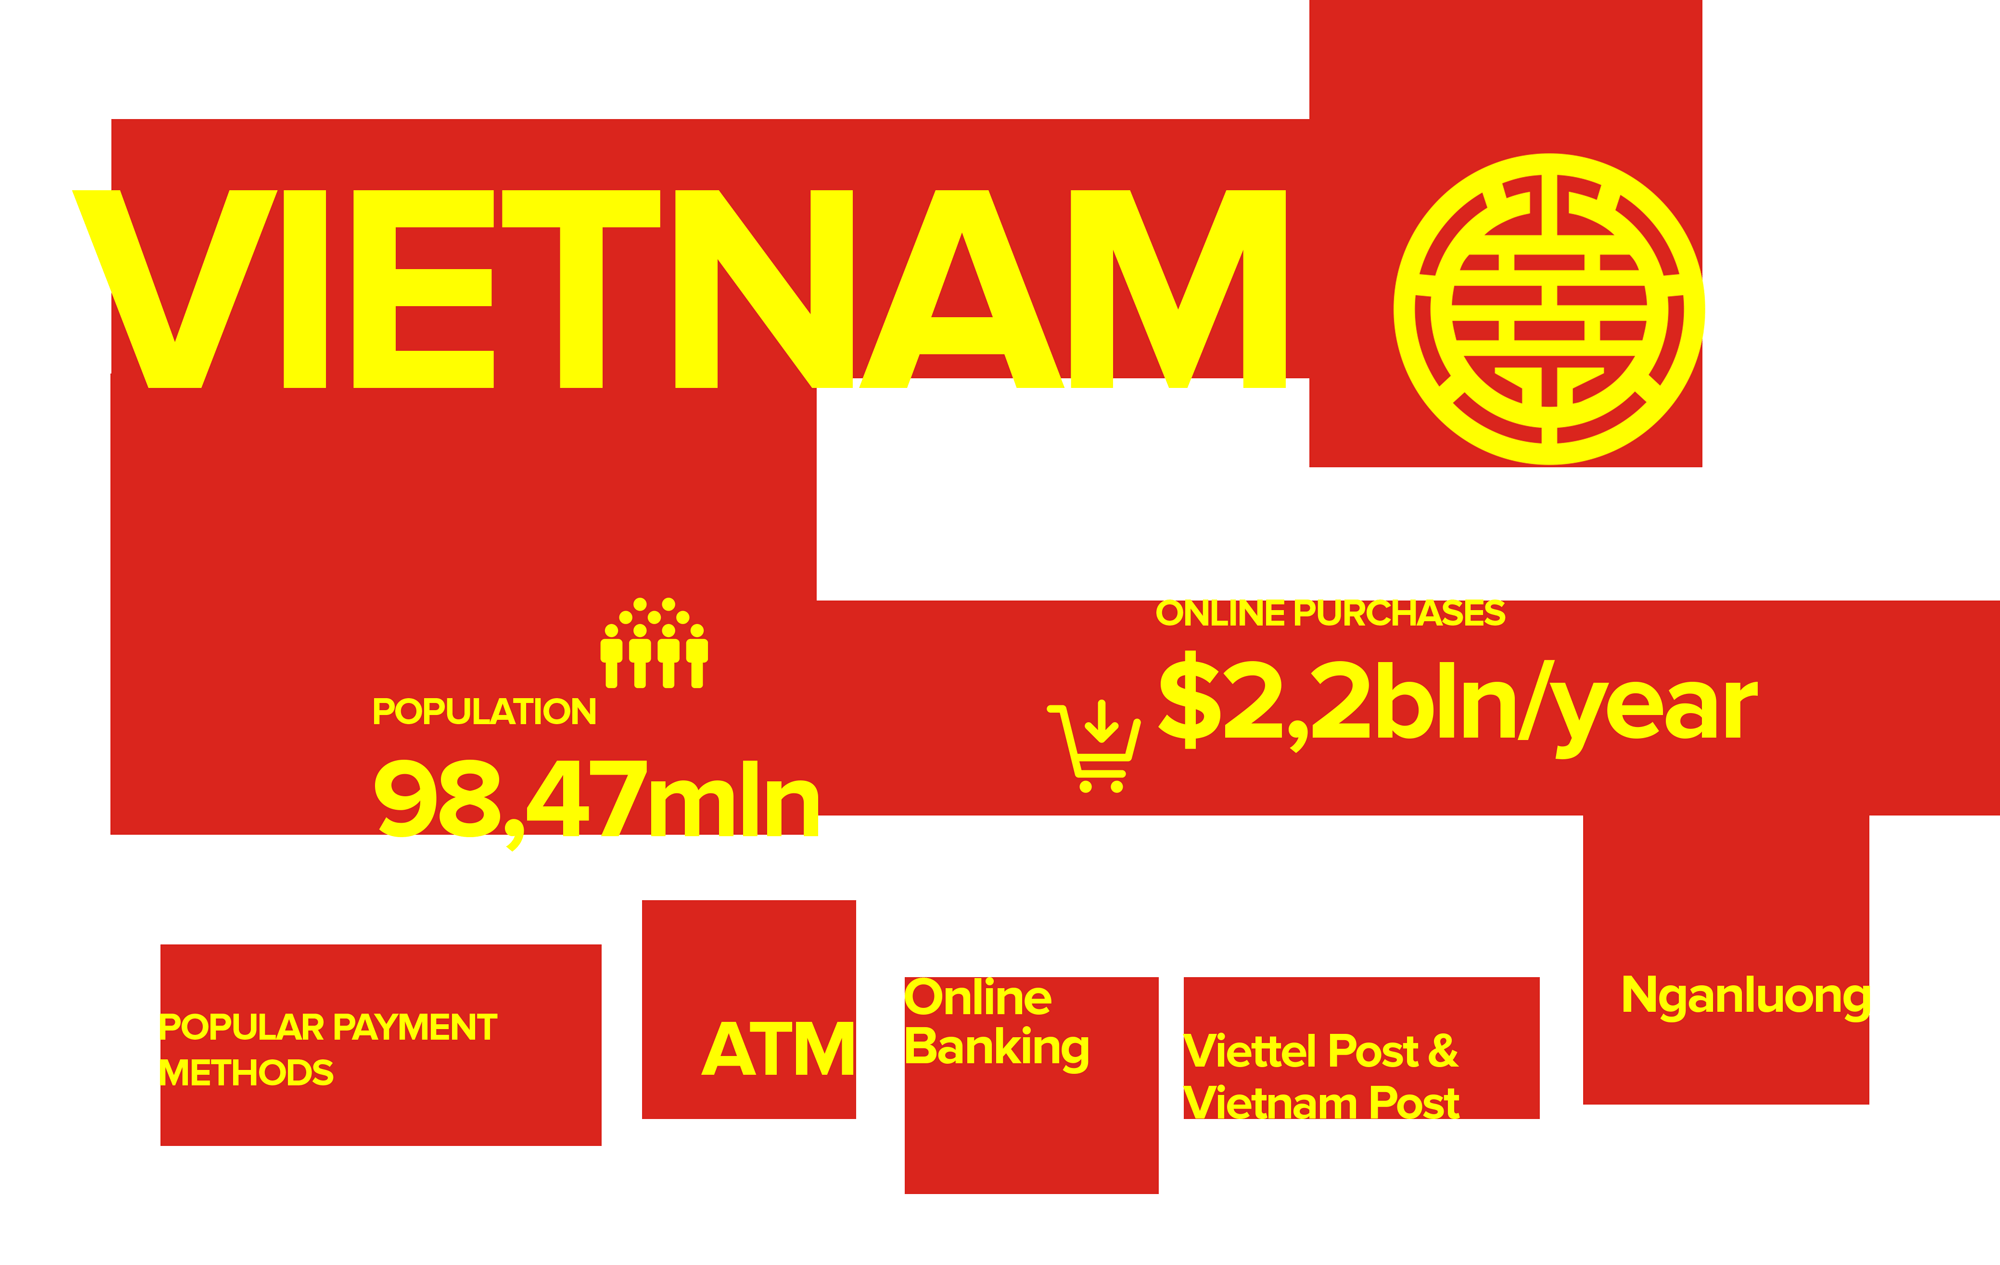 Specifics of Vietnamese payments market